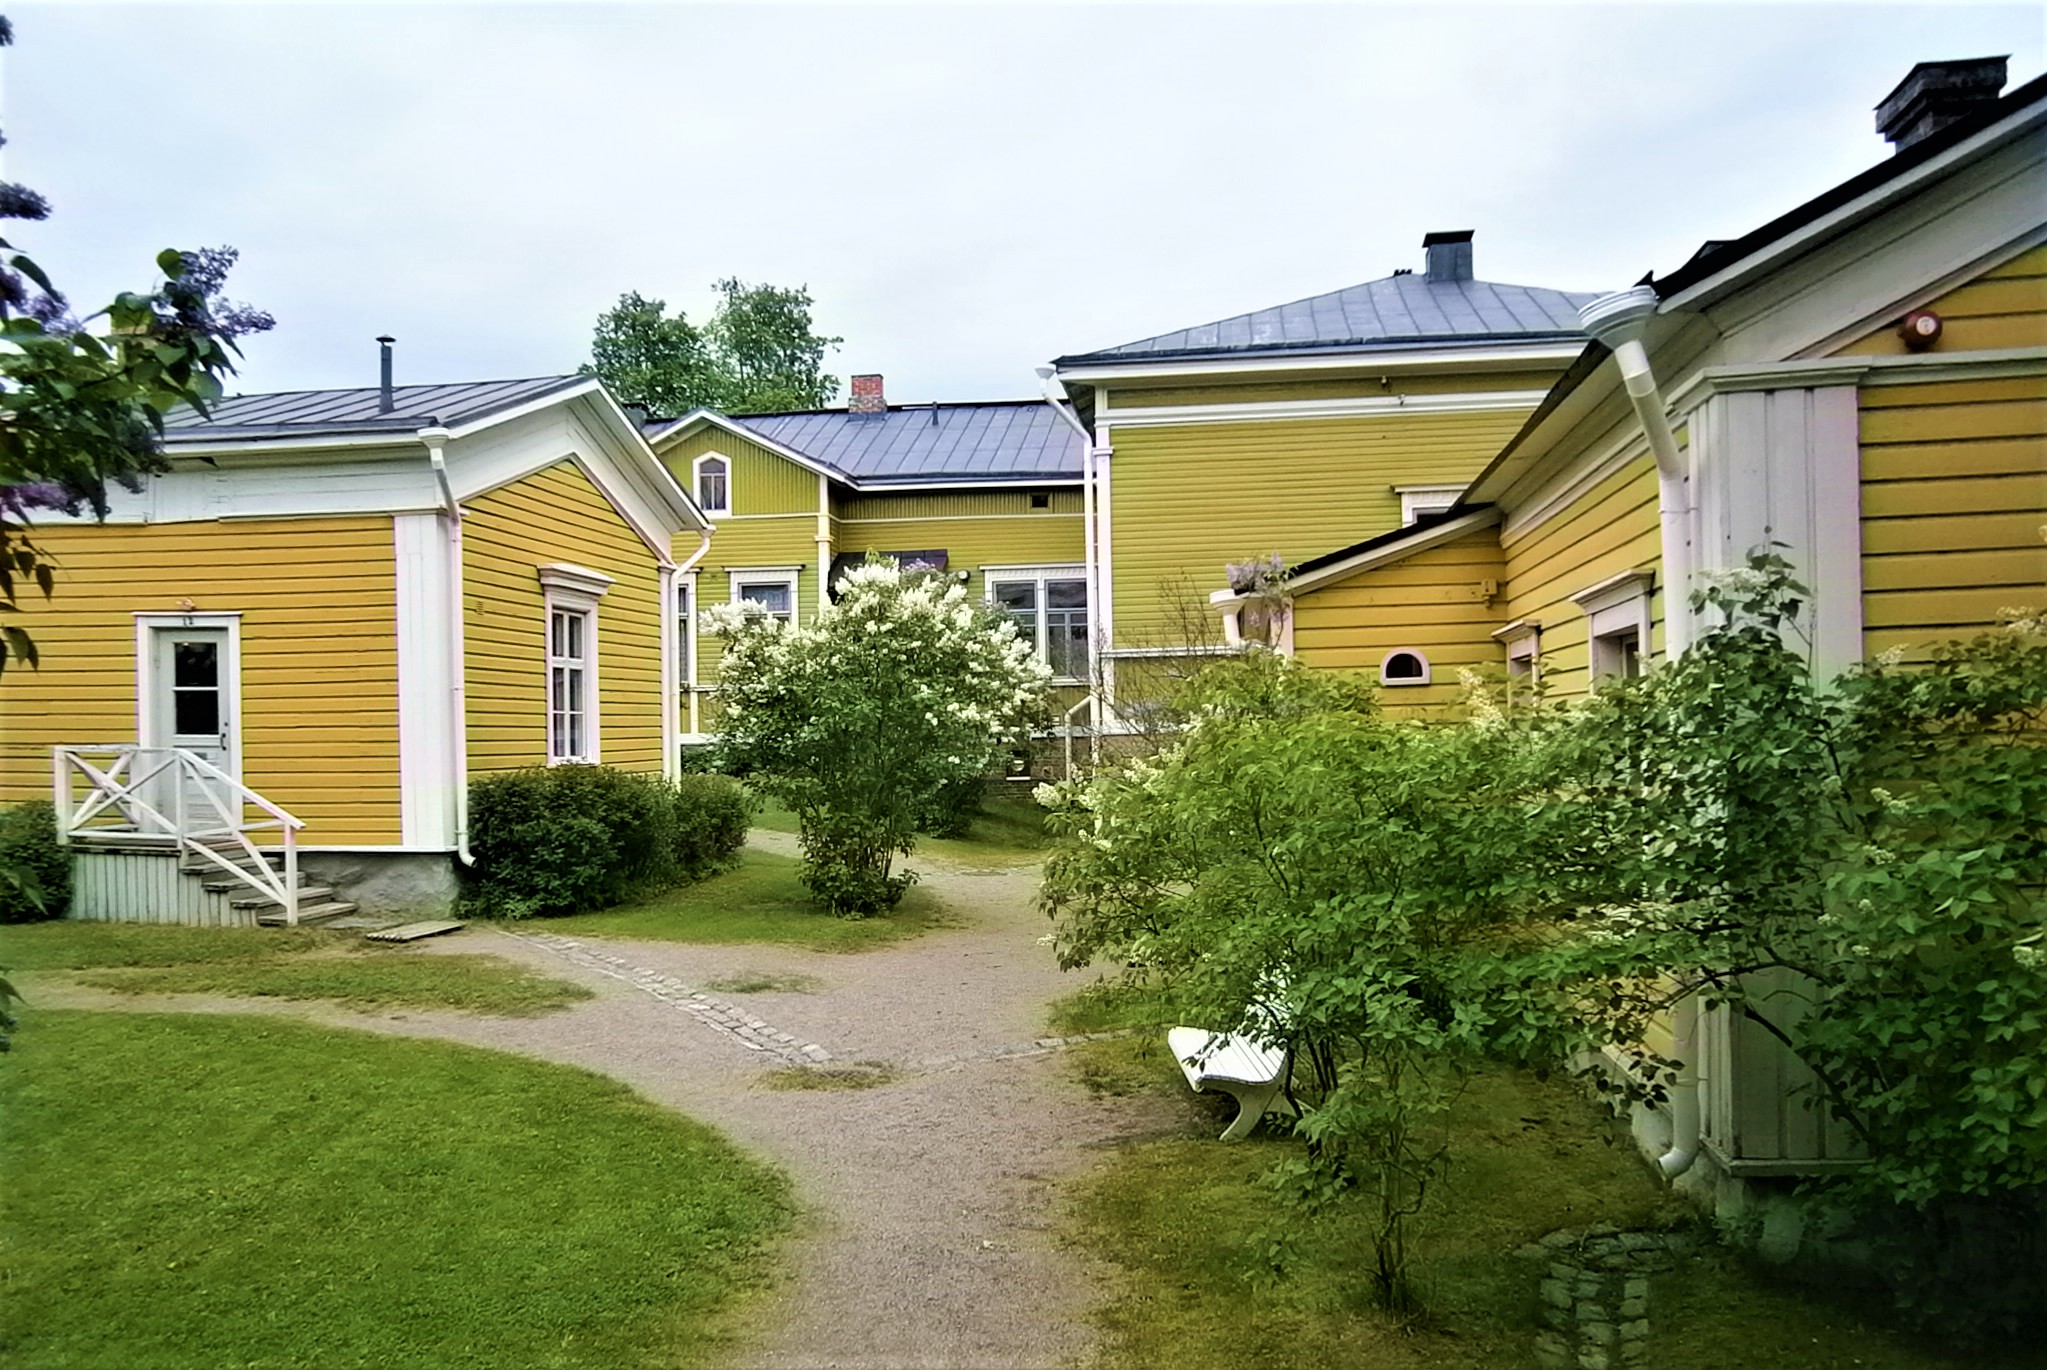 Kuopio Old Town Museum